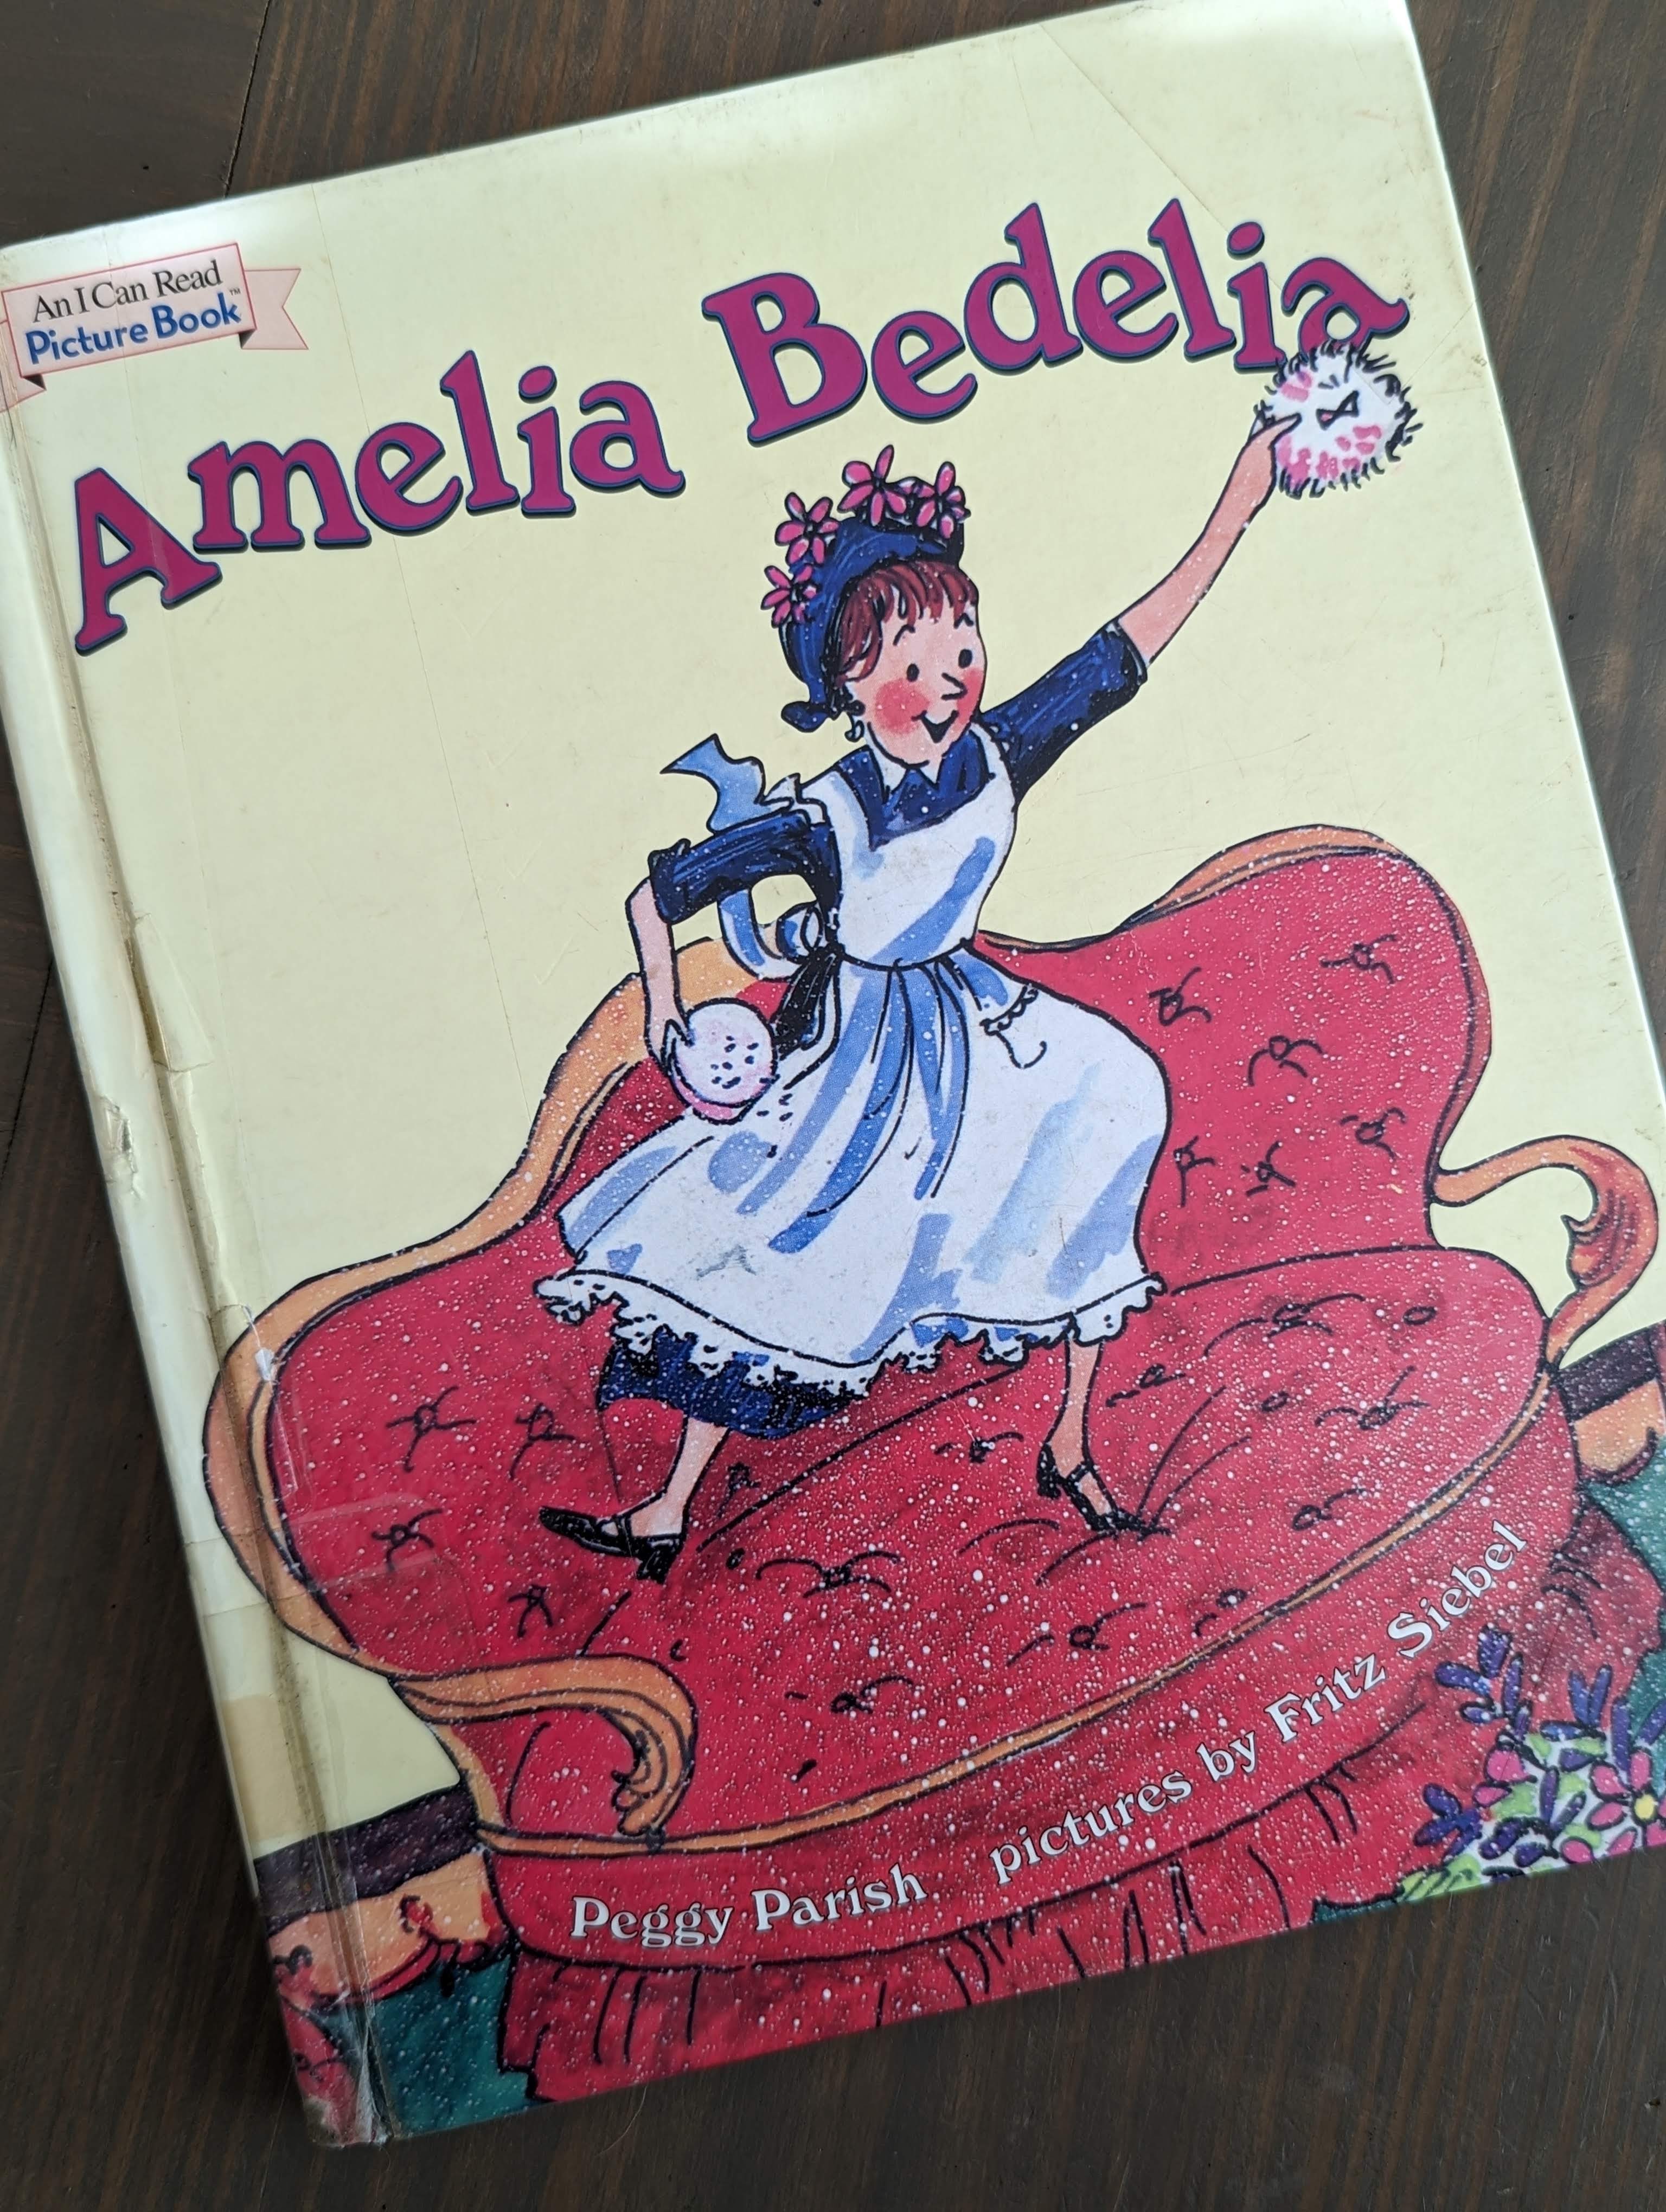 The Original Amelia Bedelia picture book by Peggy Parish